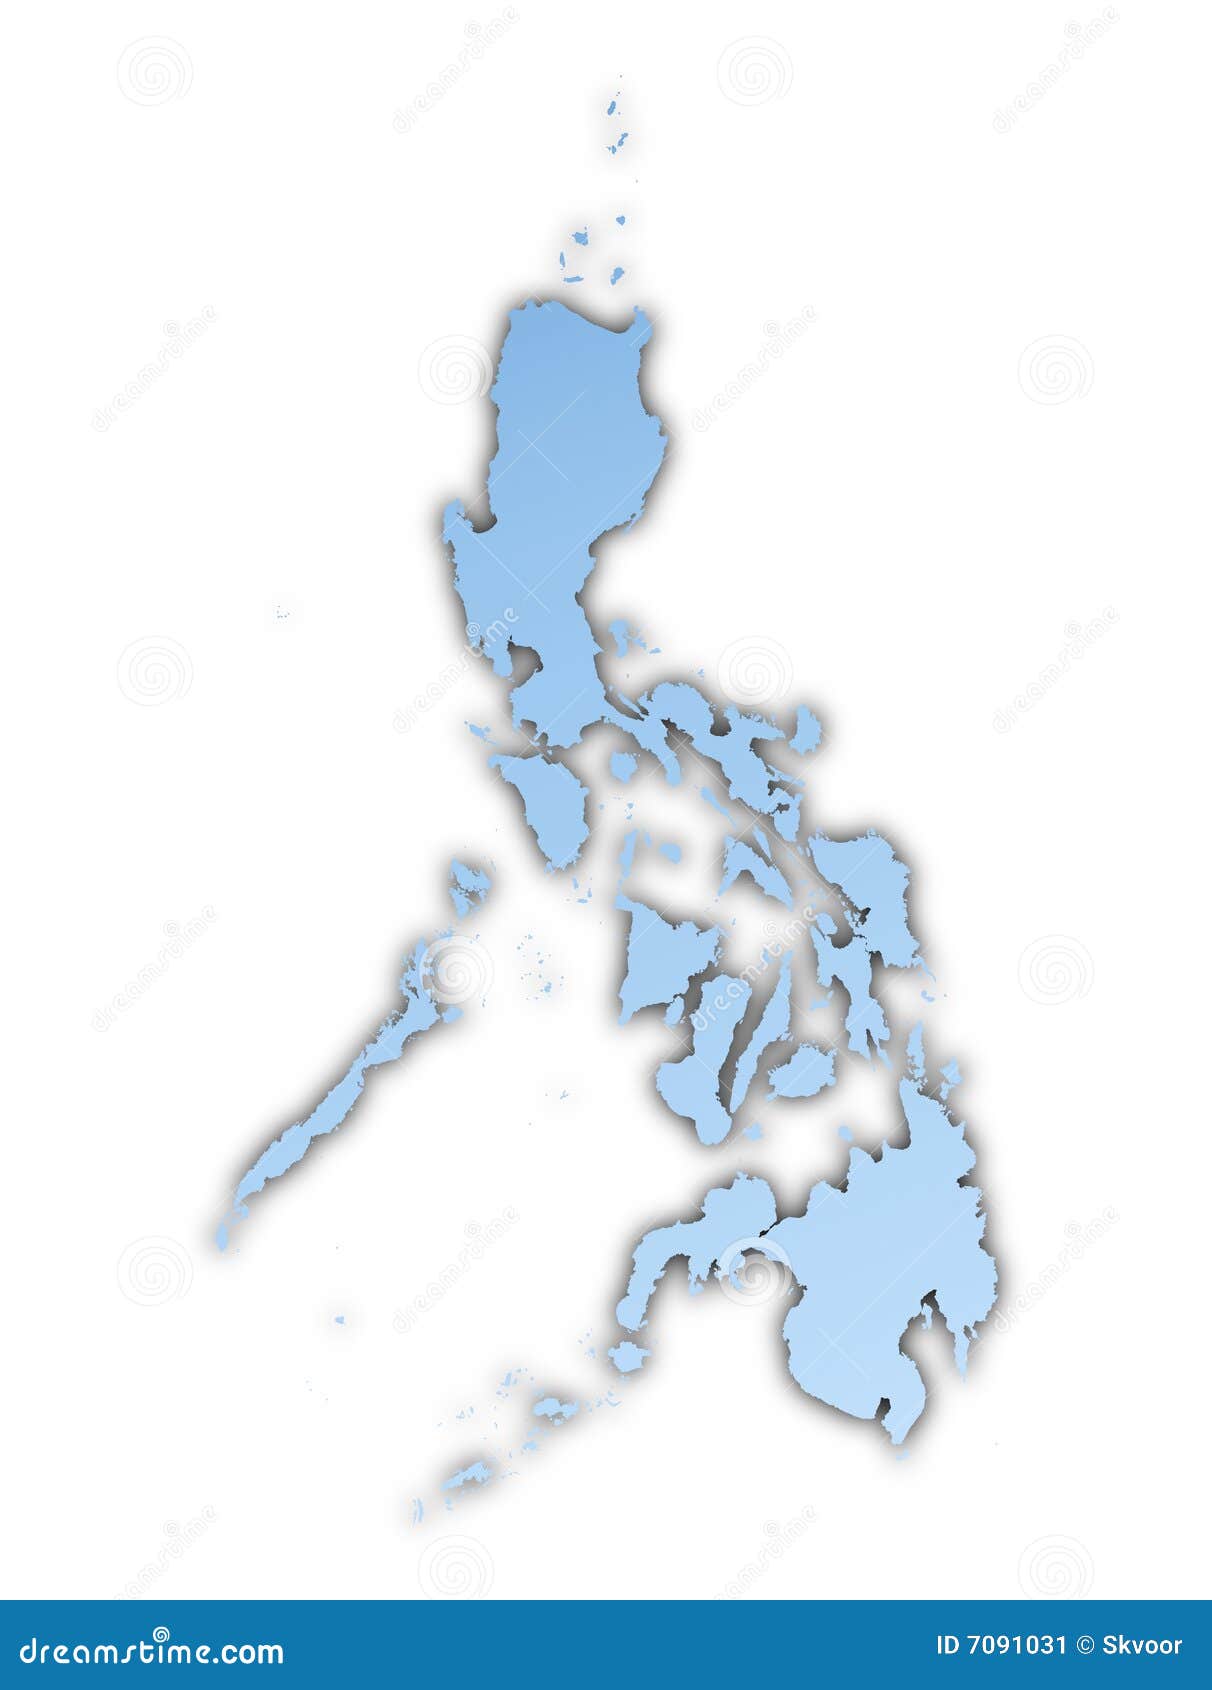 Philippines Map Stock Image - Image: 7091031